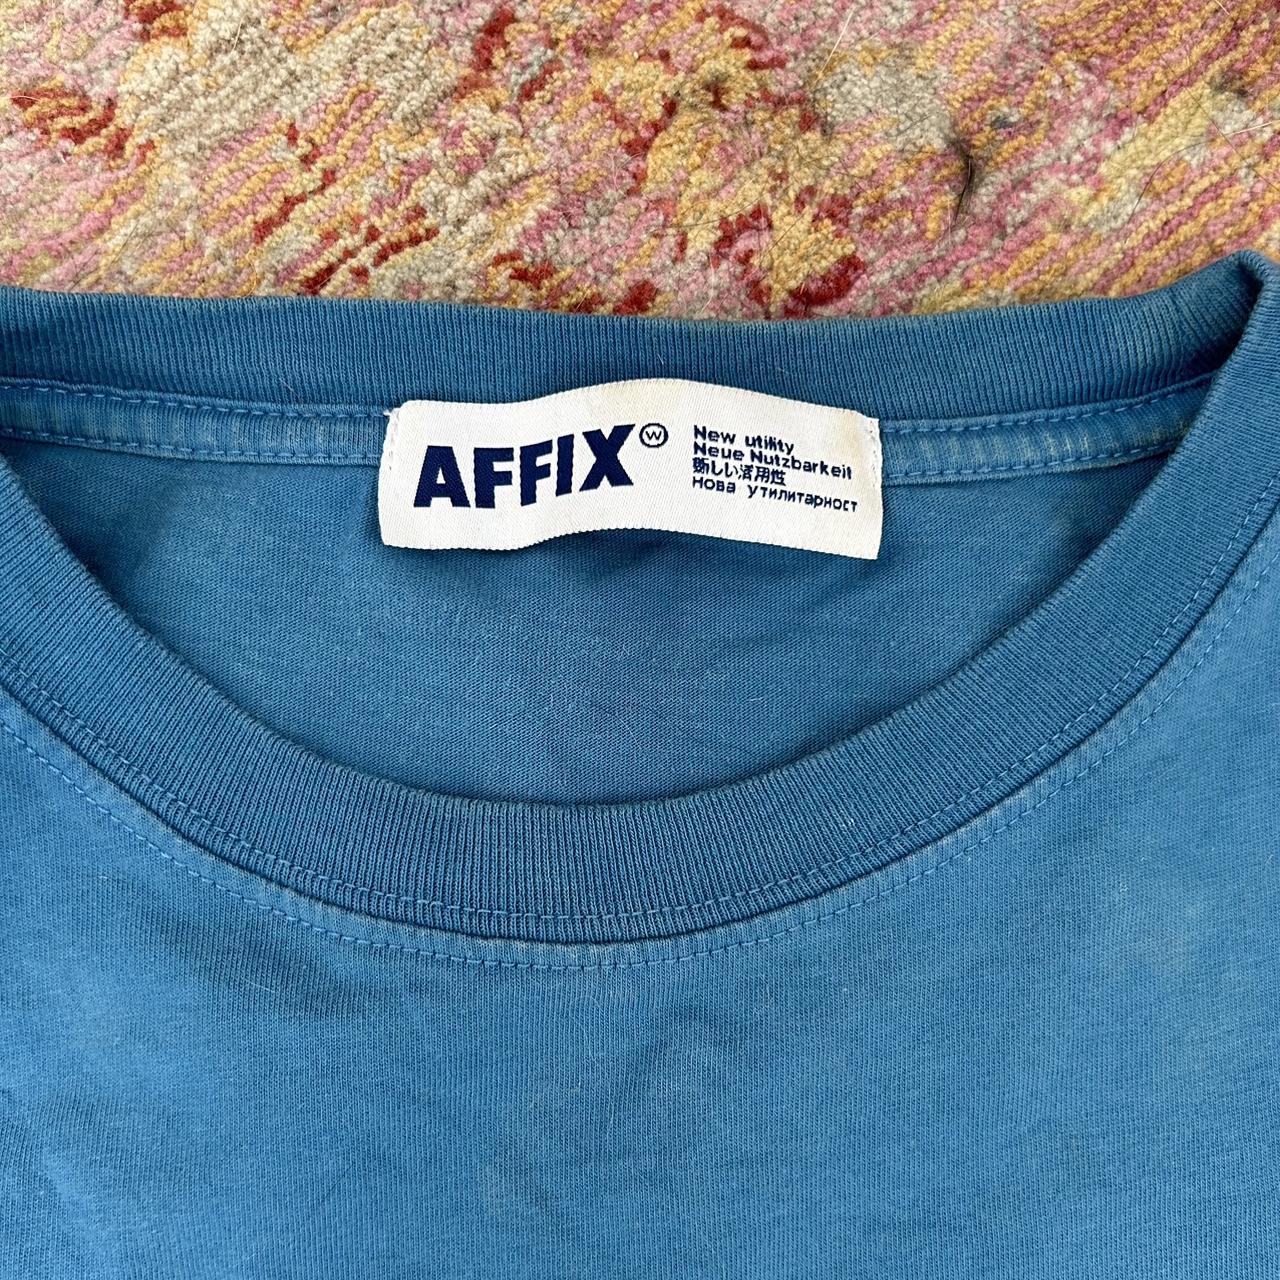 Affix Men's Blue T-shirt (4)